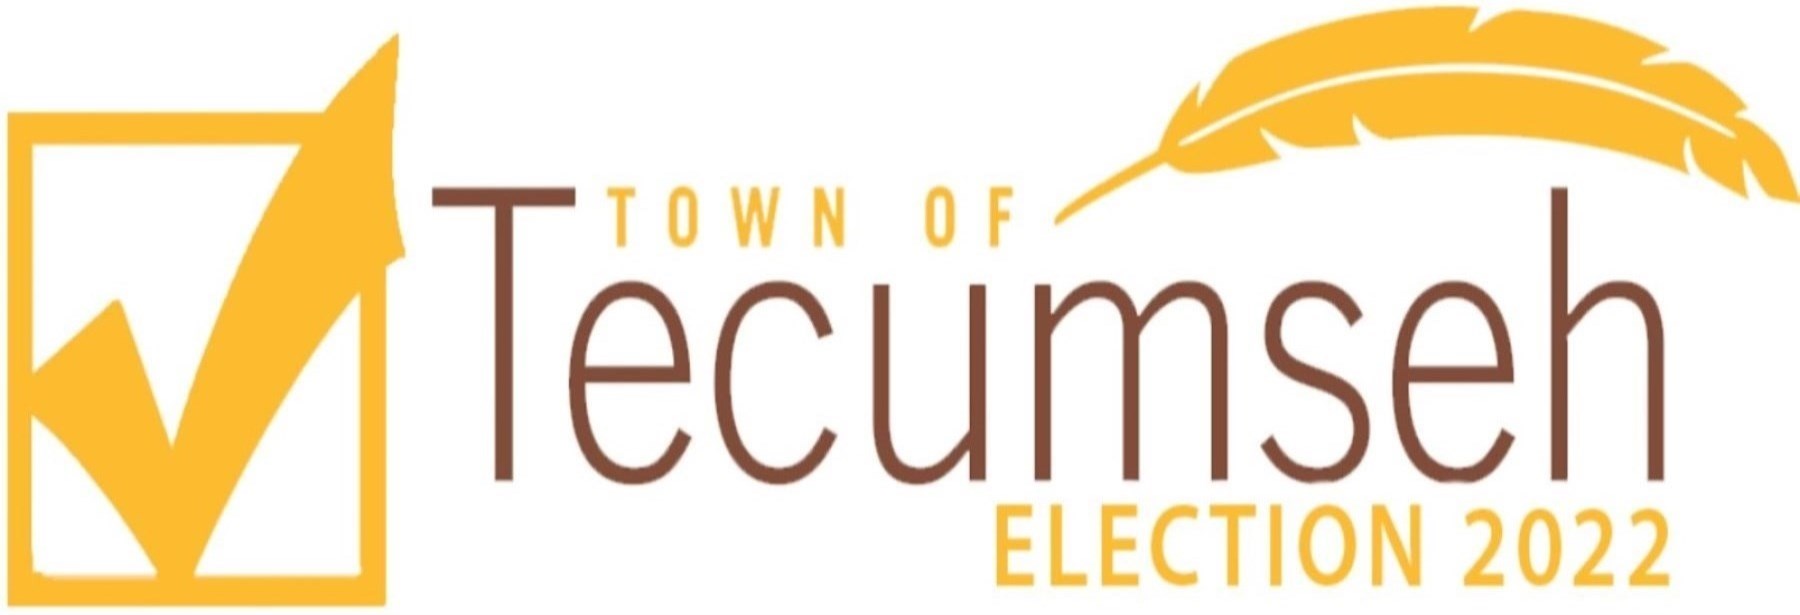 Town of Tecumseh 2022 Municipal Elections Logo